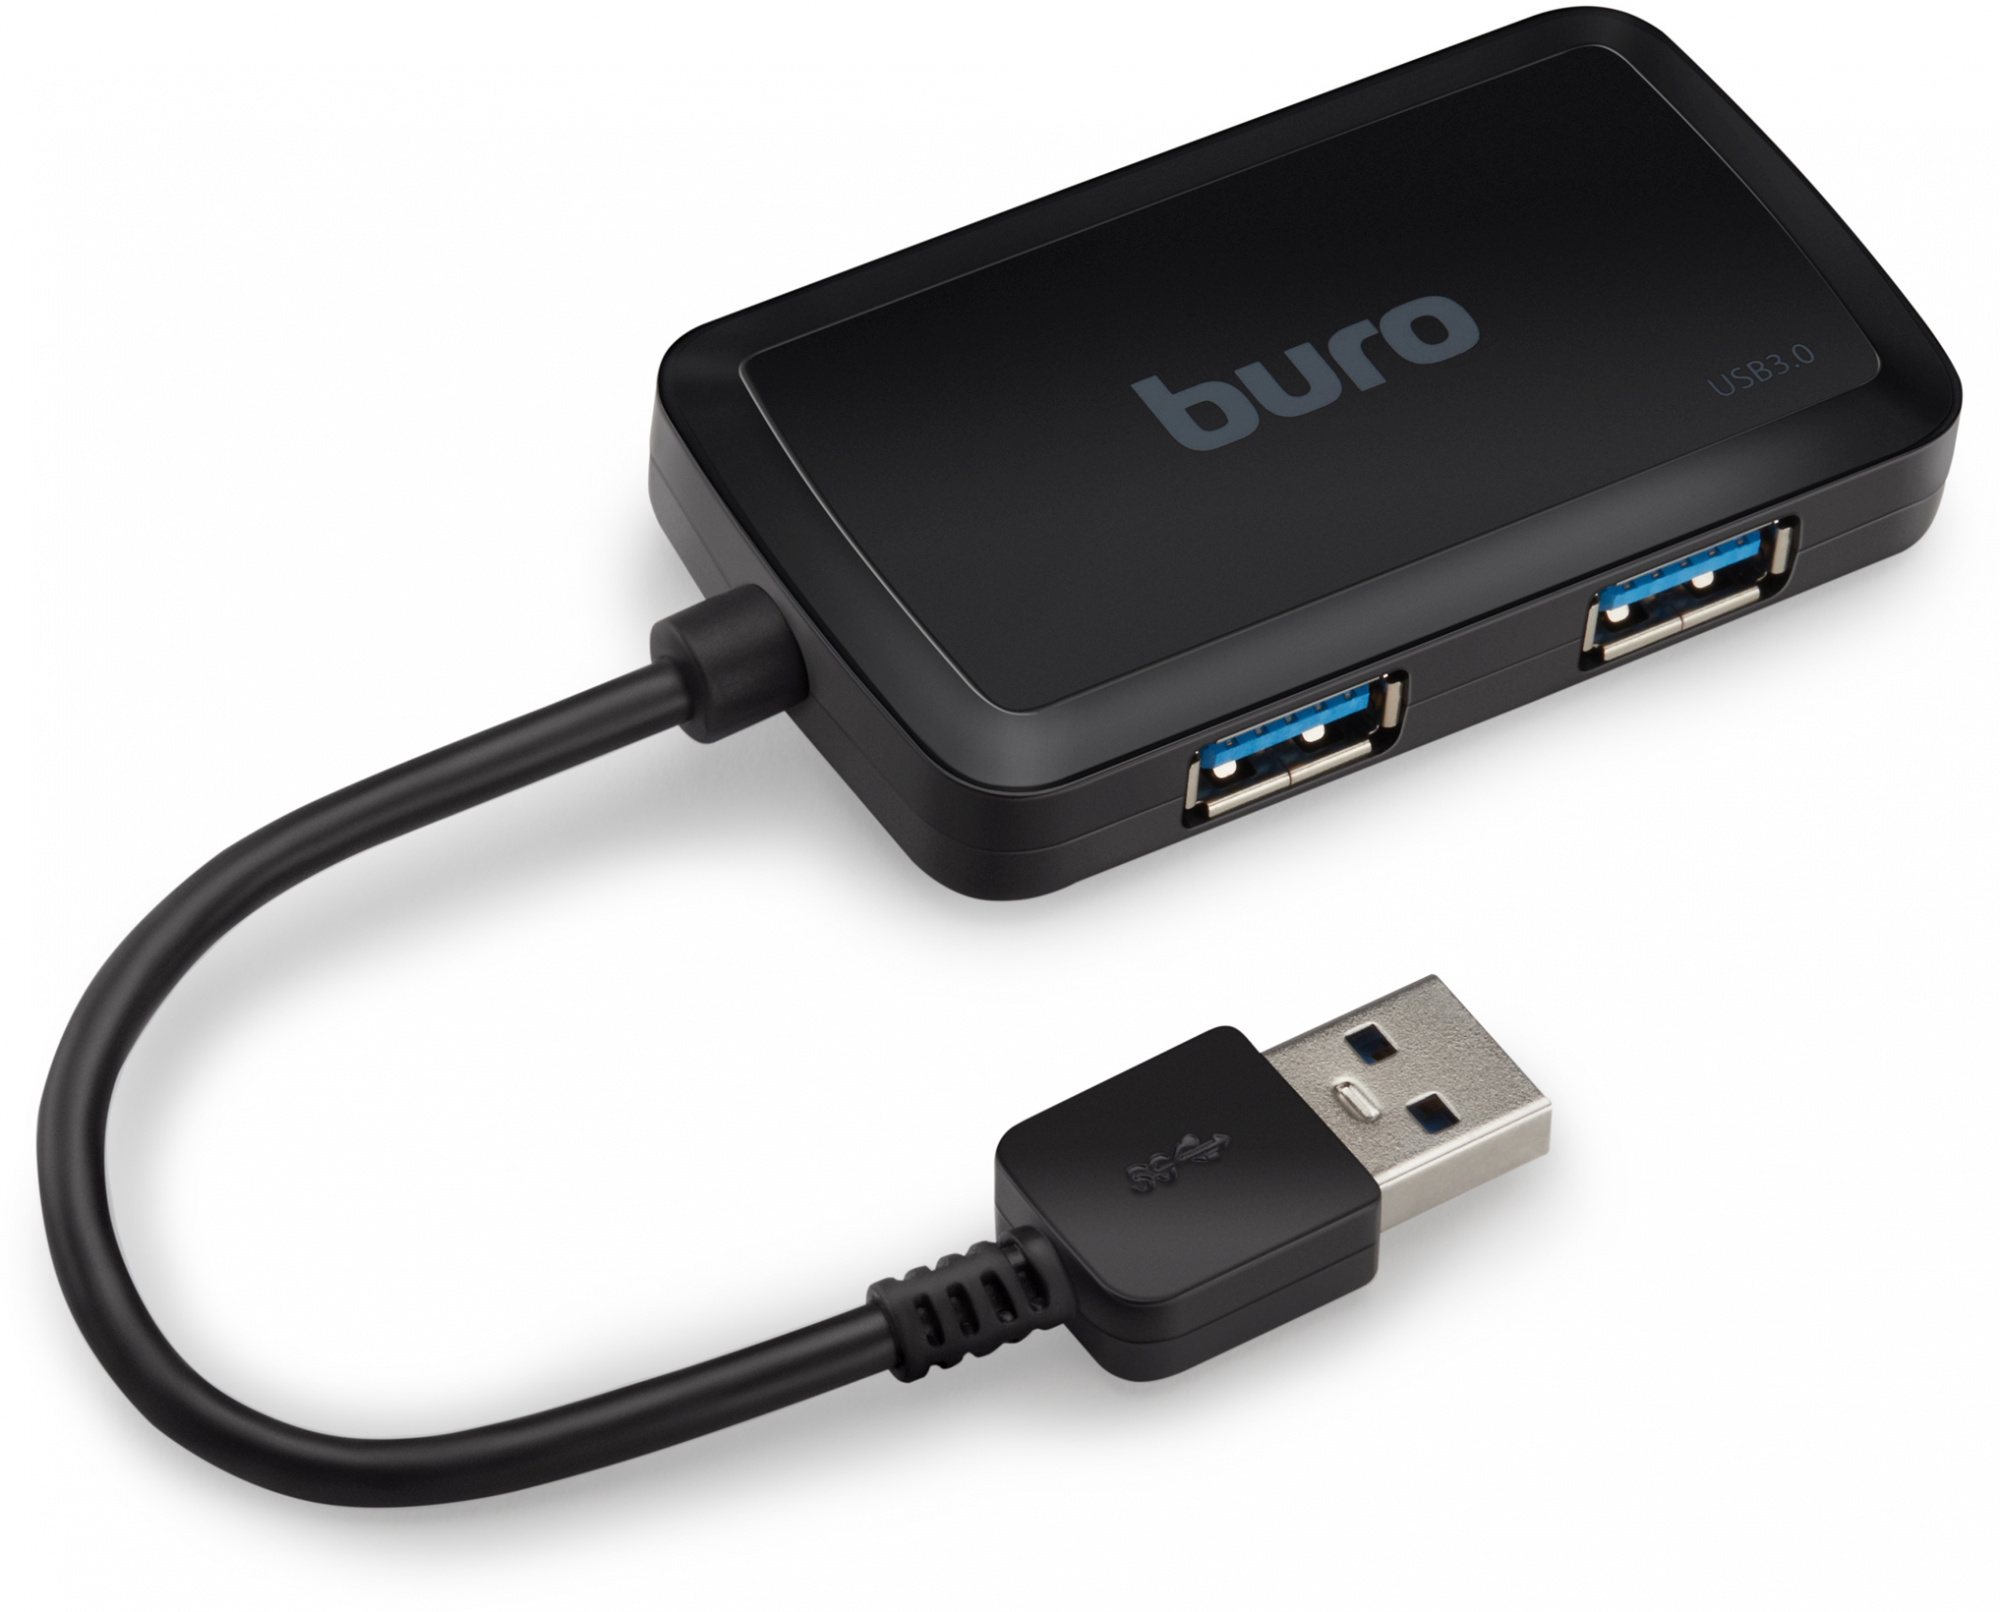 Разветвитель USB 3.0 Buro BU-HUB4-U3.0-S